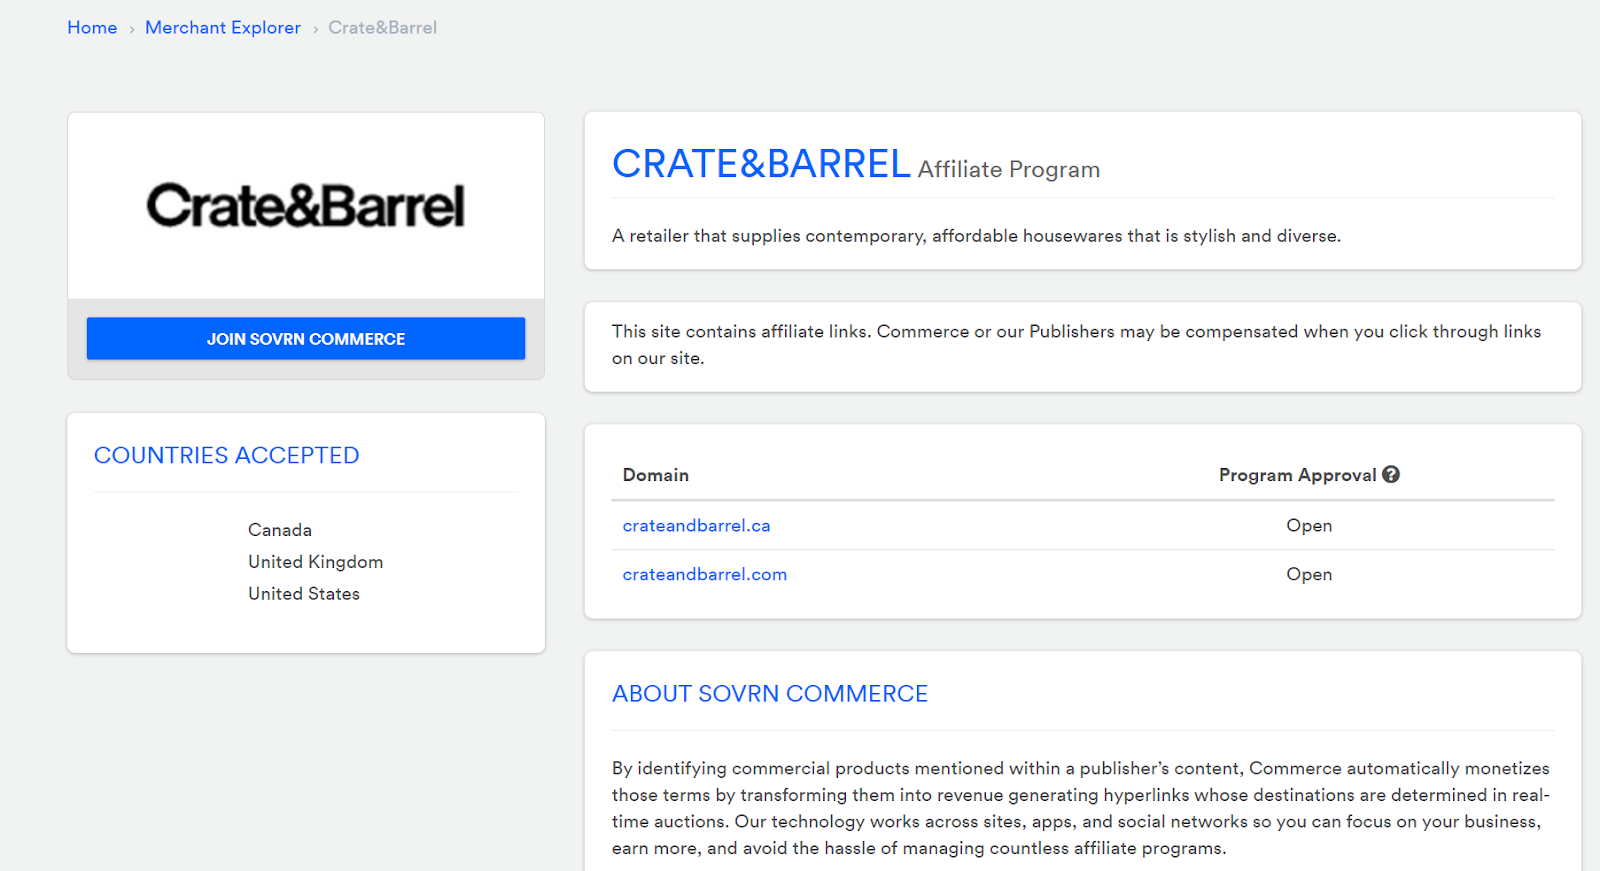 Crate & barrel affiliate program home page